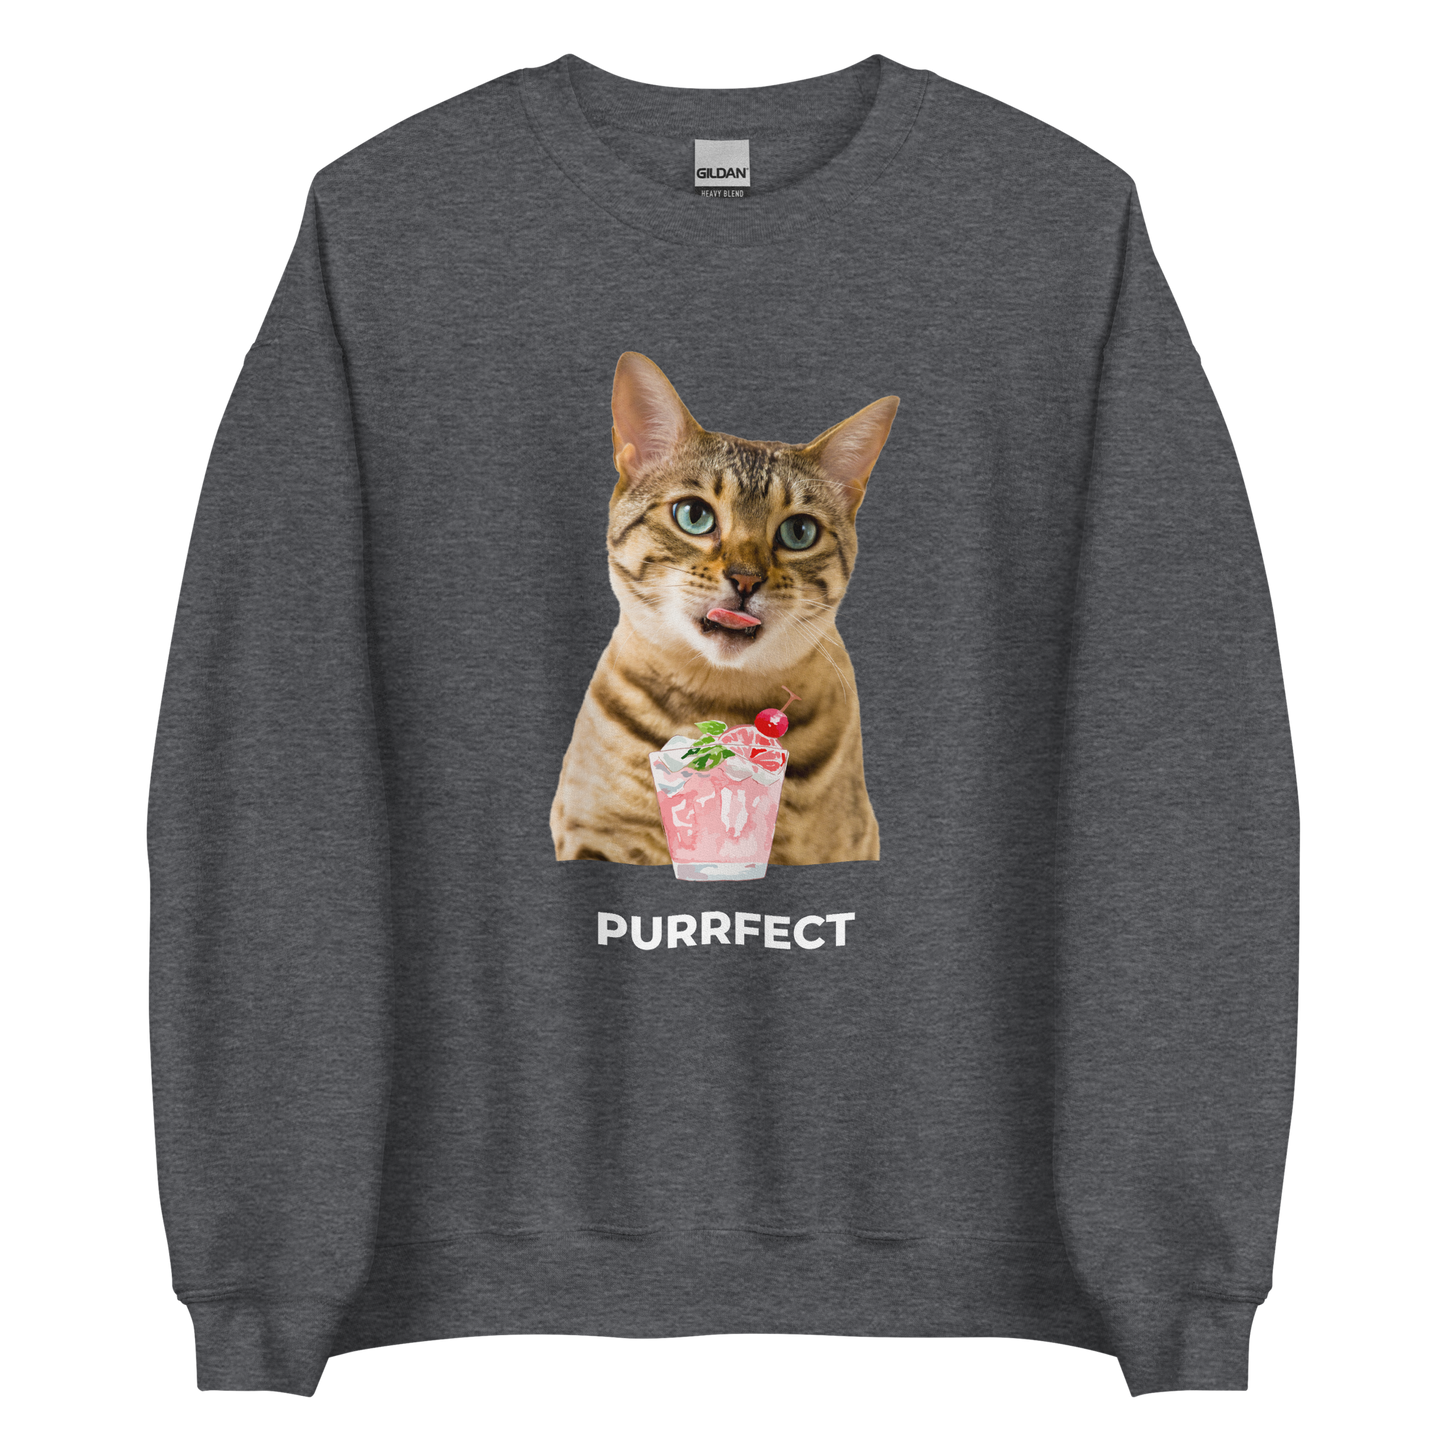 Dark Heather Cat Sweatshirt featuring a Purrfect graphic on the chest - Funny Graphic Cat Sweatshirts - Boozy Fox